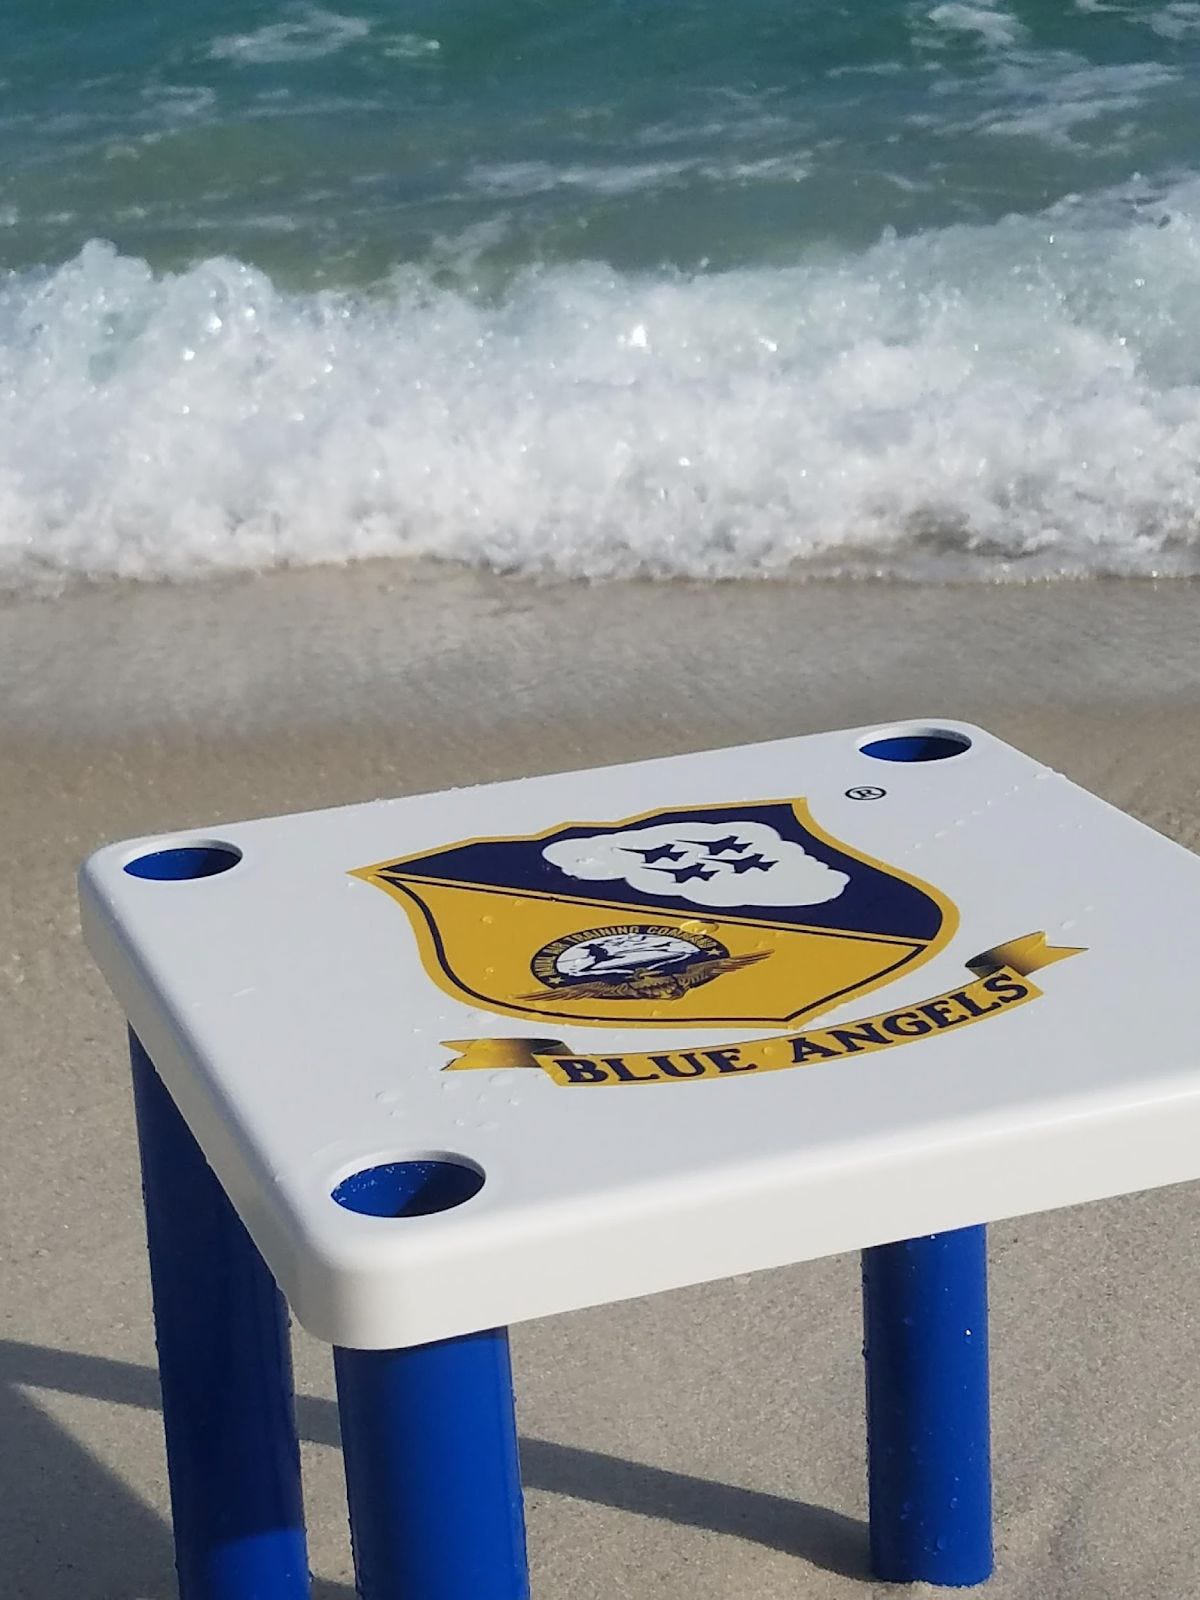 portable beach tables